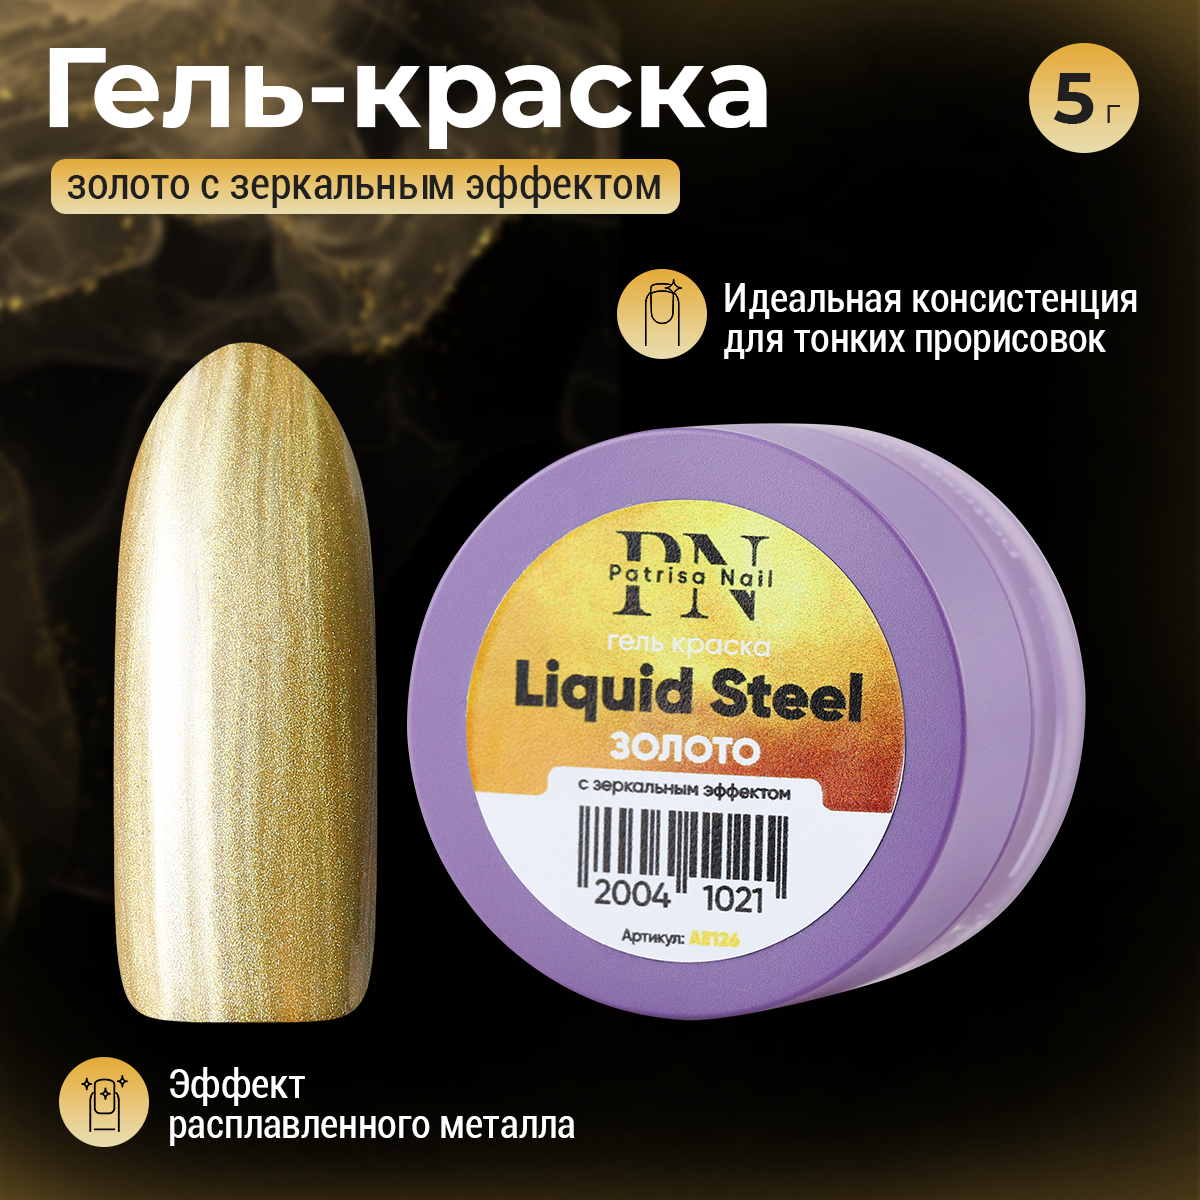 Гель-краска Patrisa nail, Liquid Steel, Золото, 5 г